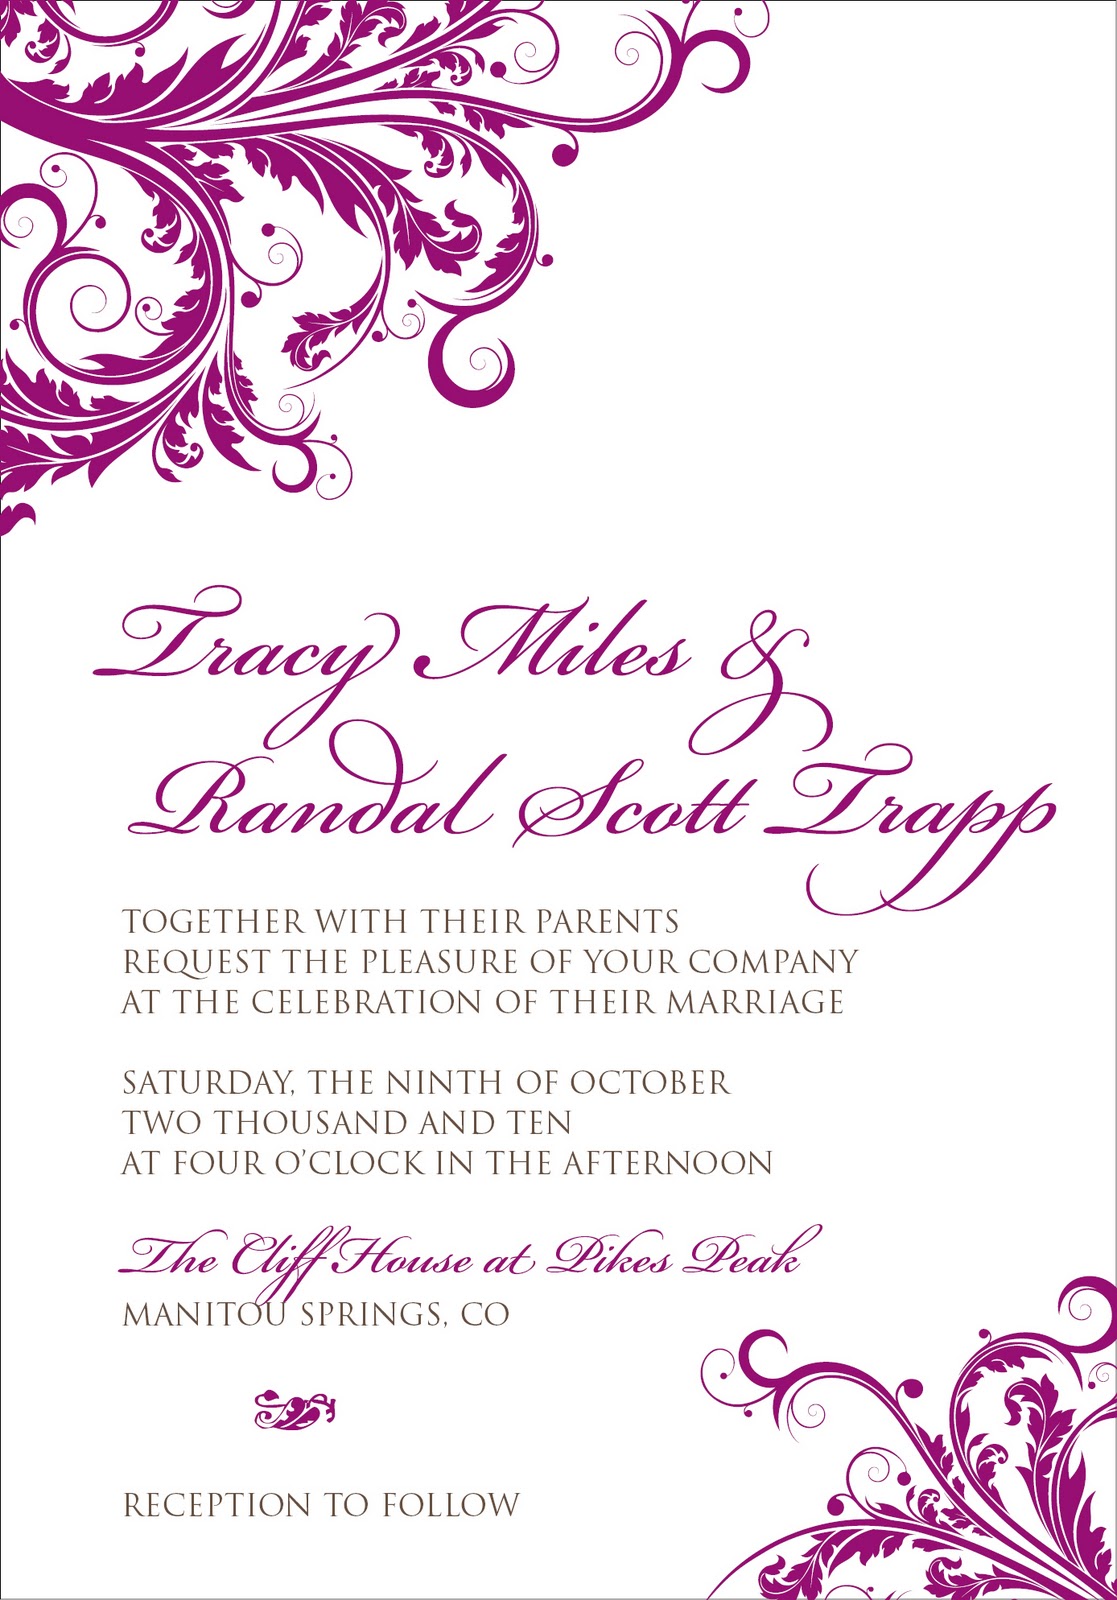 clip art wedding invitation designs - photo #35